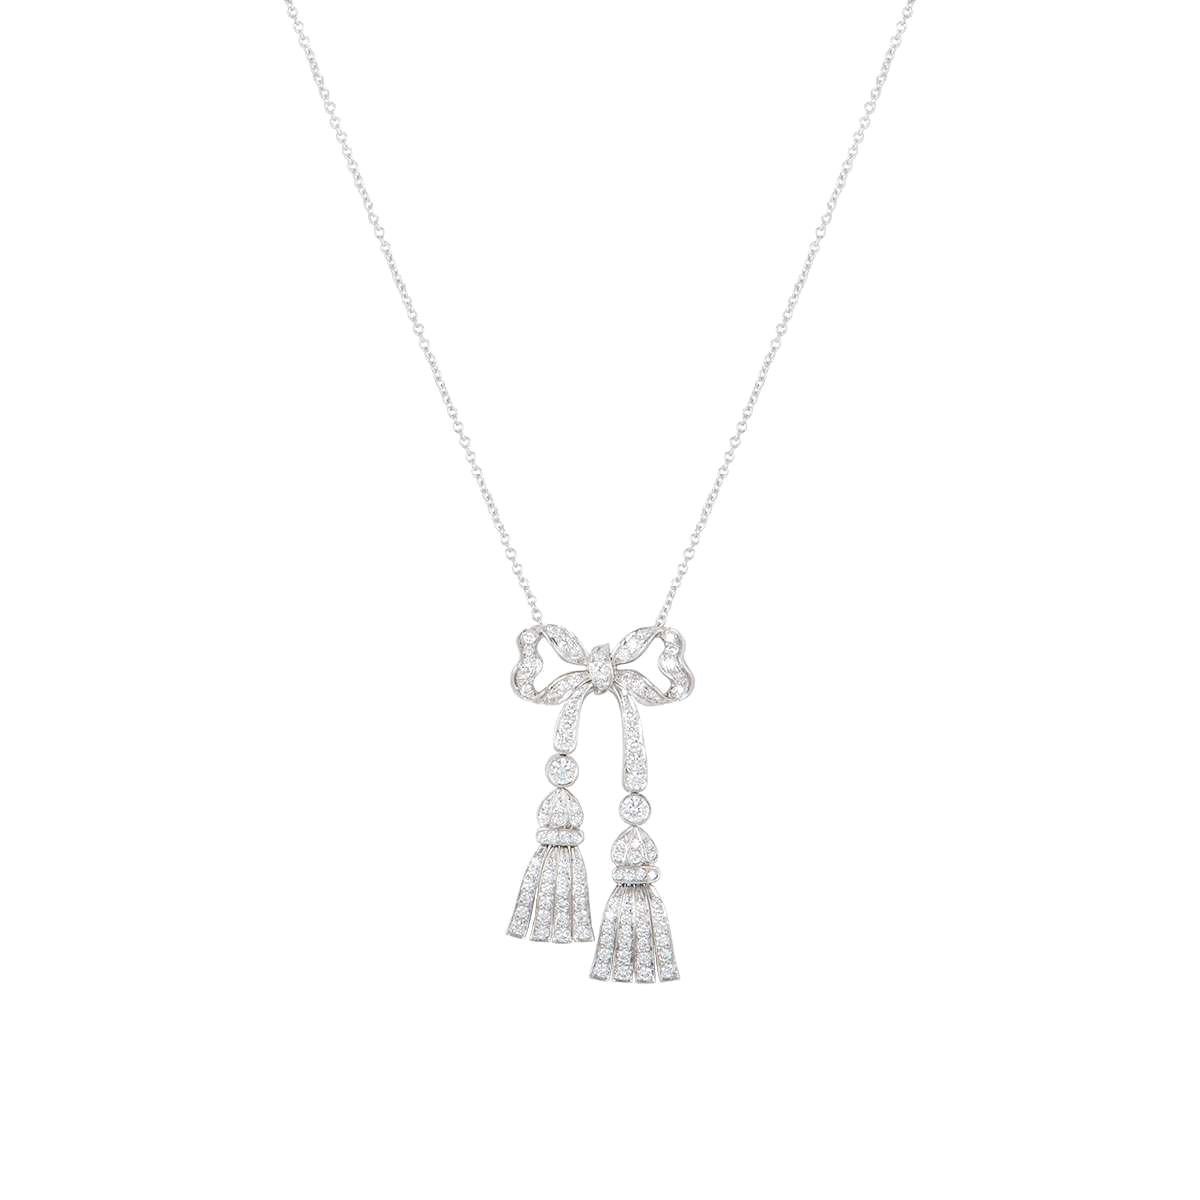 Tiffany & Co. Platinum Diamond Bow Necklace 1.36 Carat